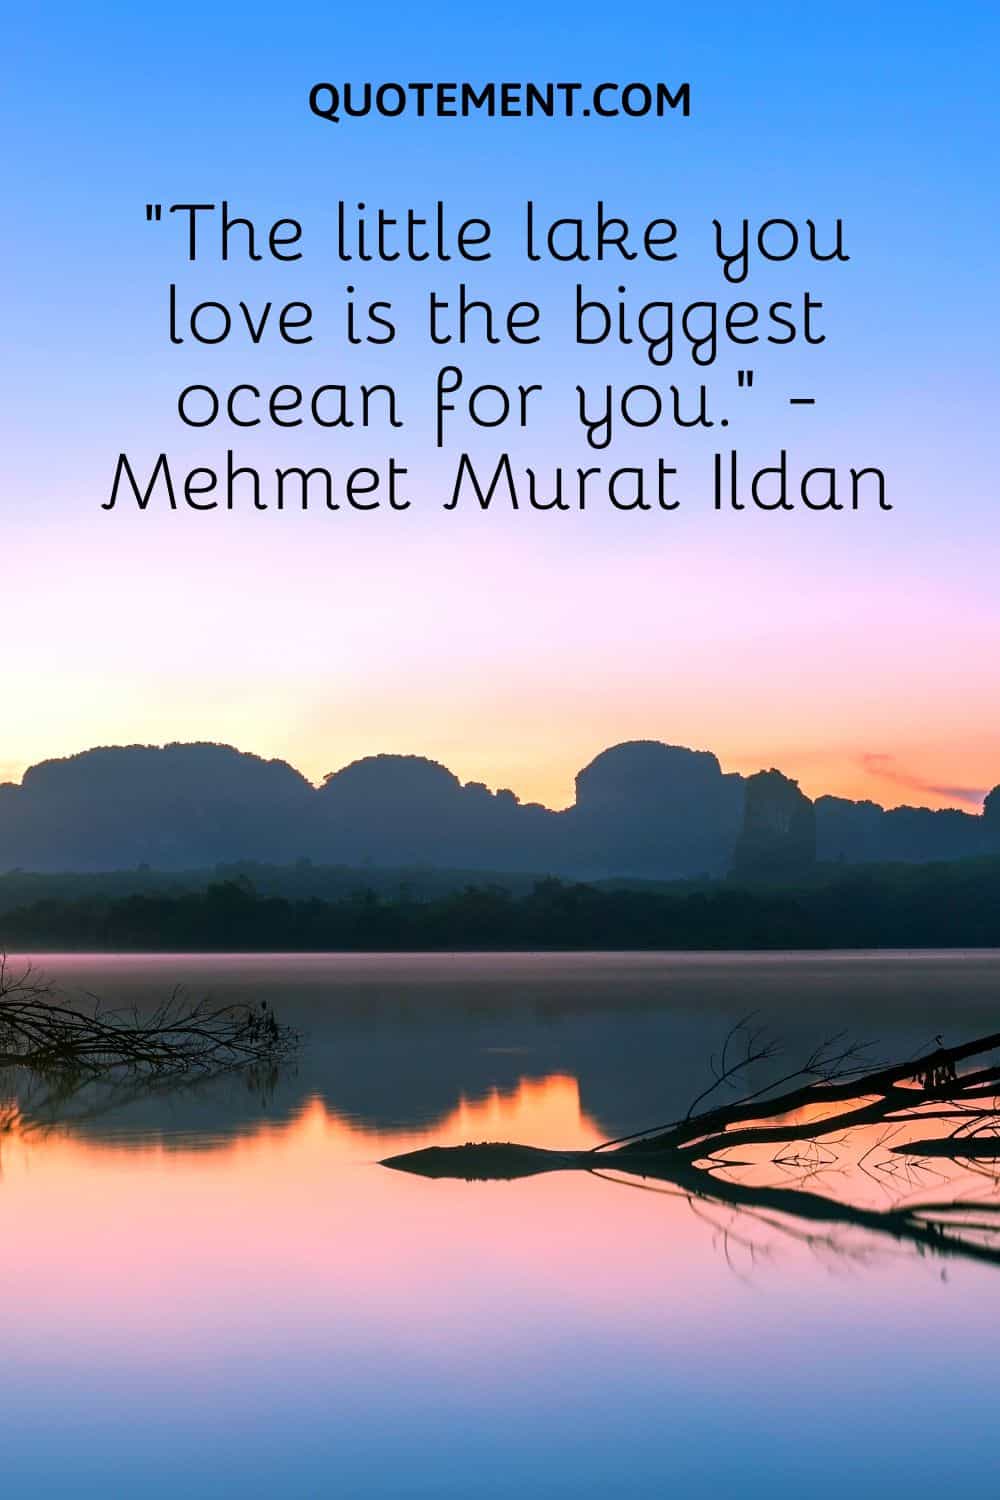 “The little lake you love is the biggest ocean for you.” - Mehmet Murat Ildan